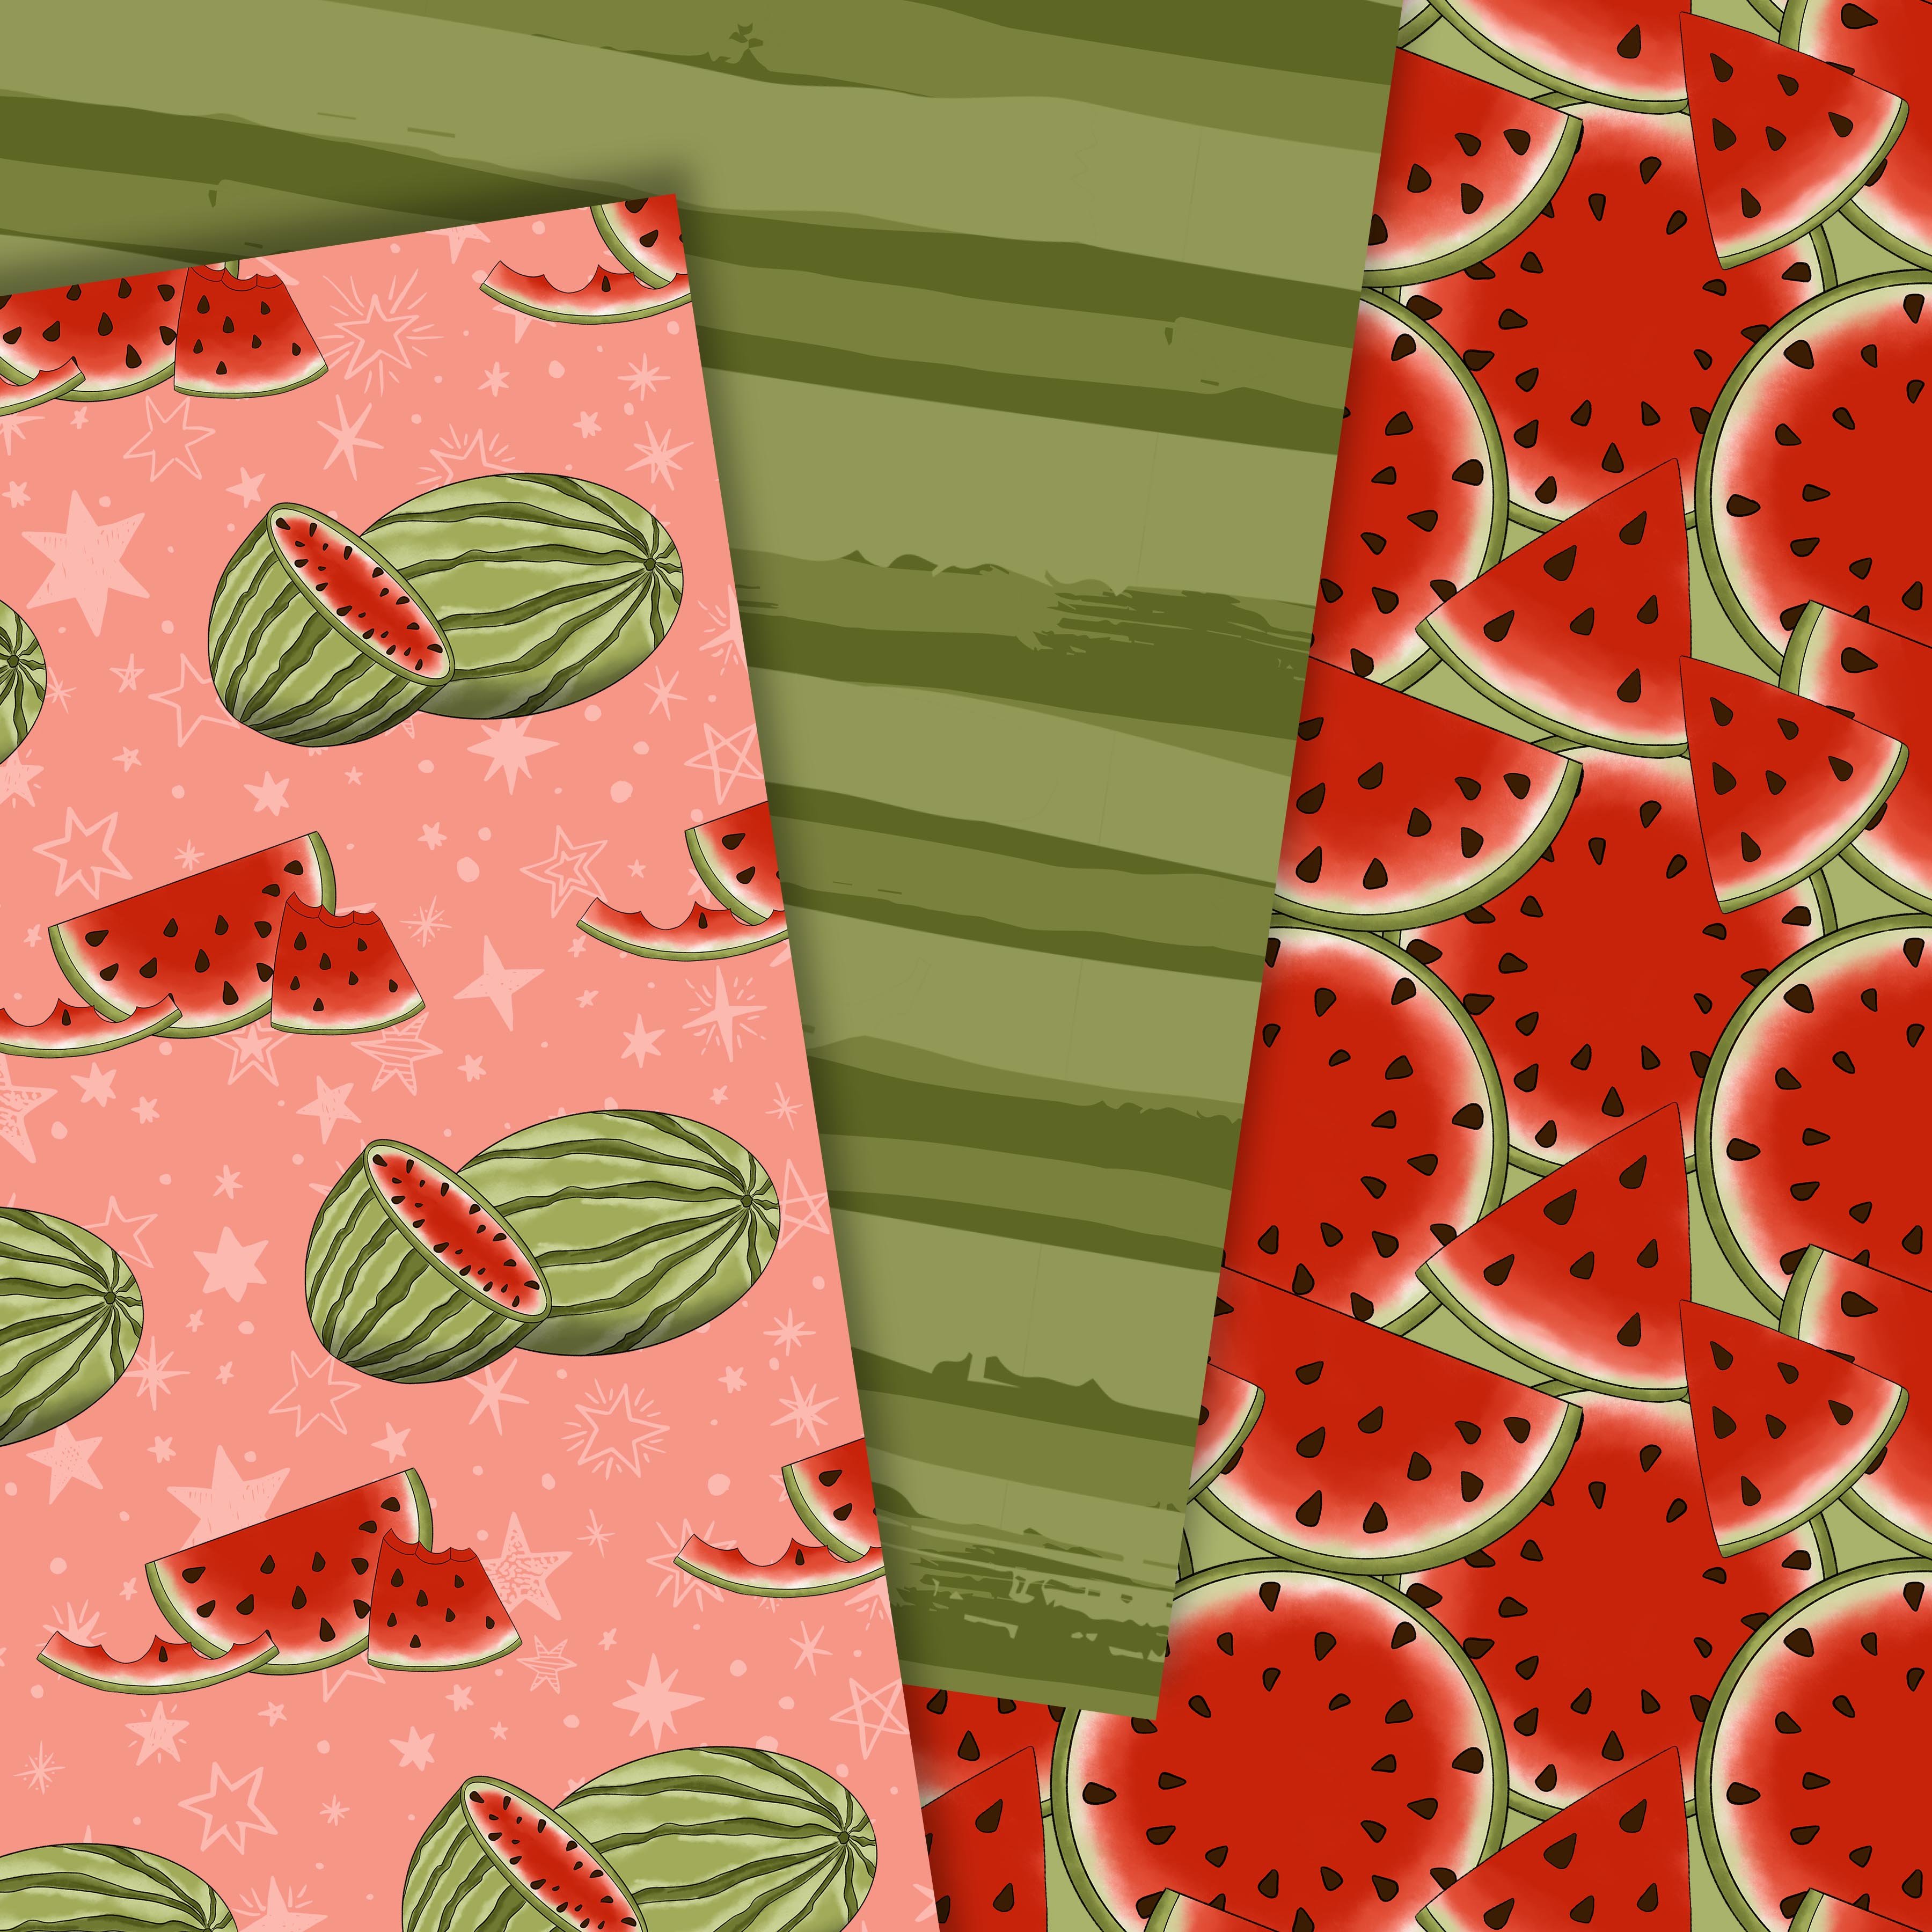 Watermelon pattern preview image.